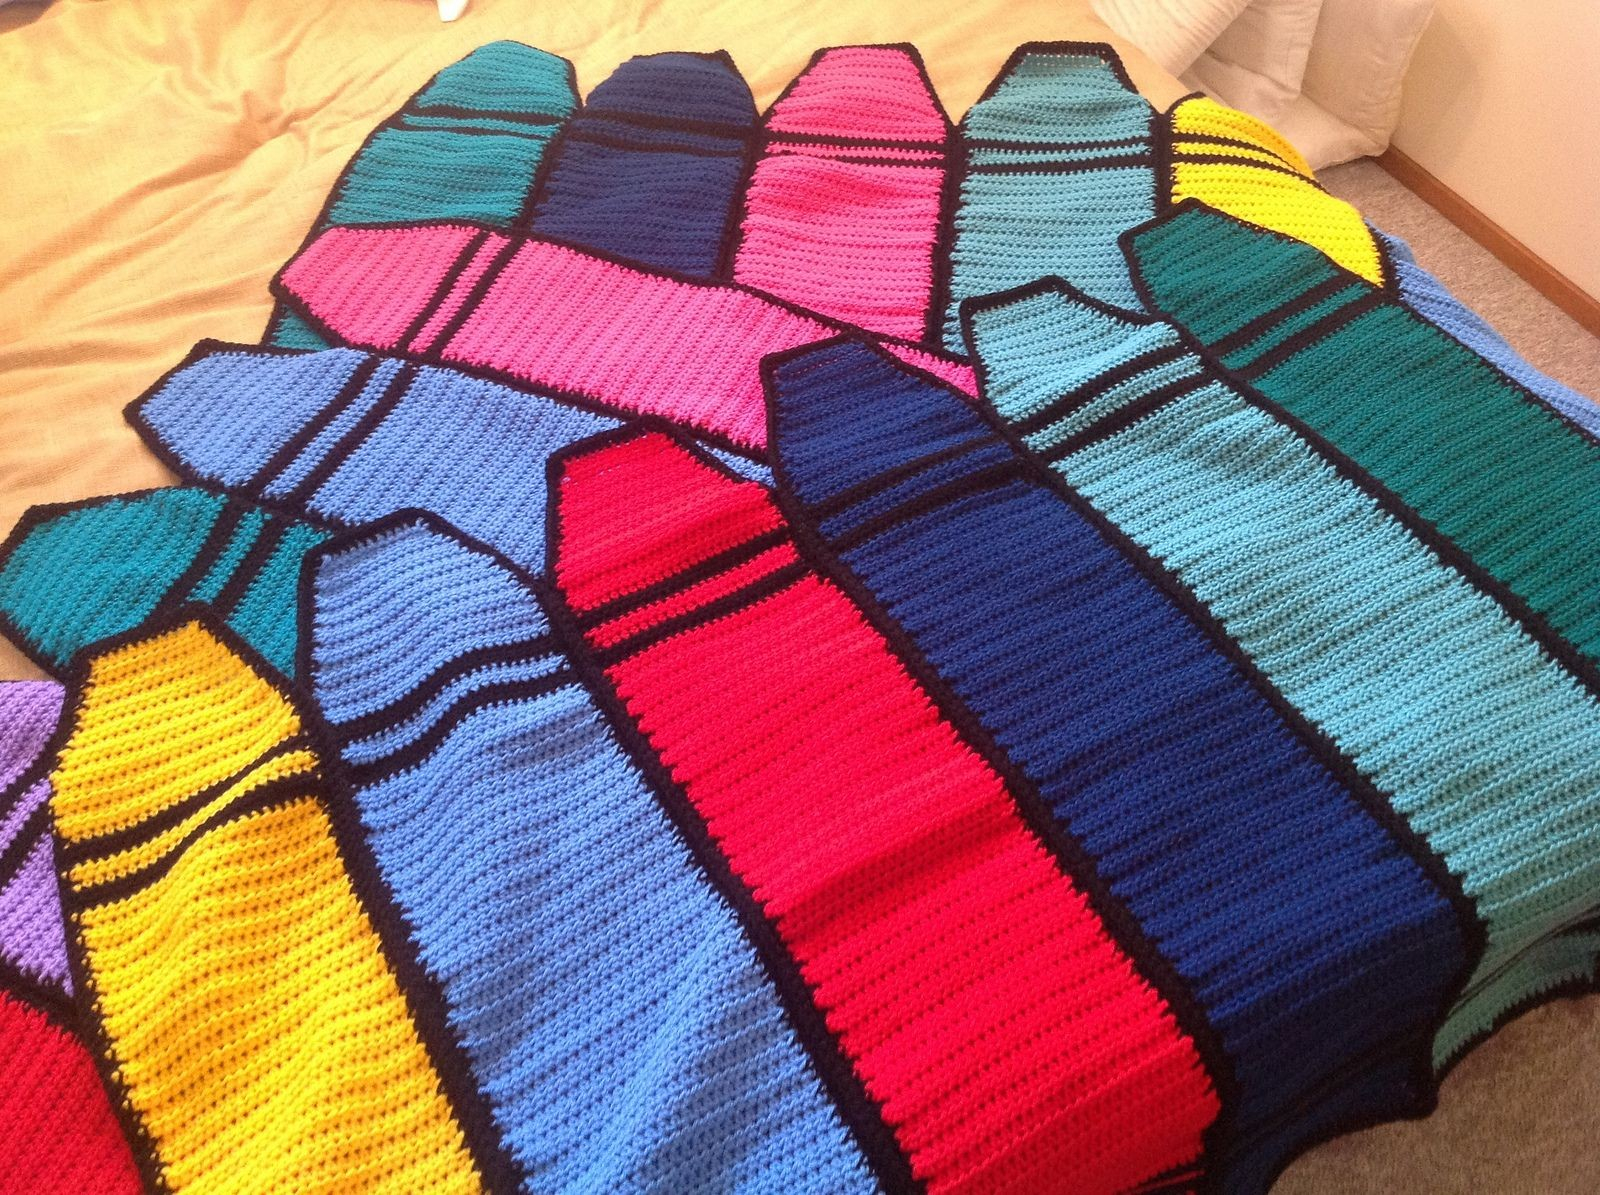 Ravelry Patterns Knitting Knitted Ba Blanket Patterns Free Inspirational Ravelry Crayon